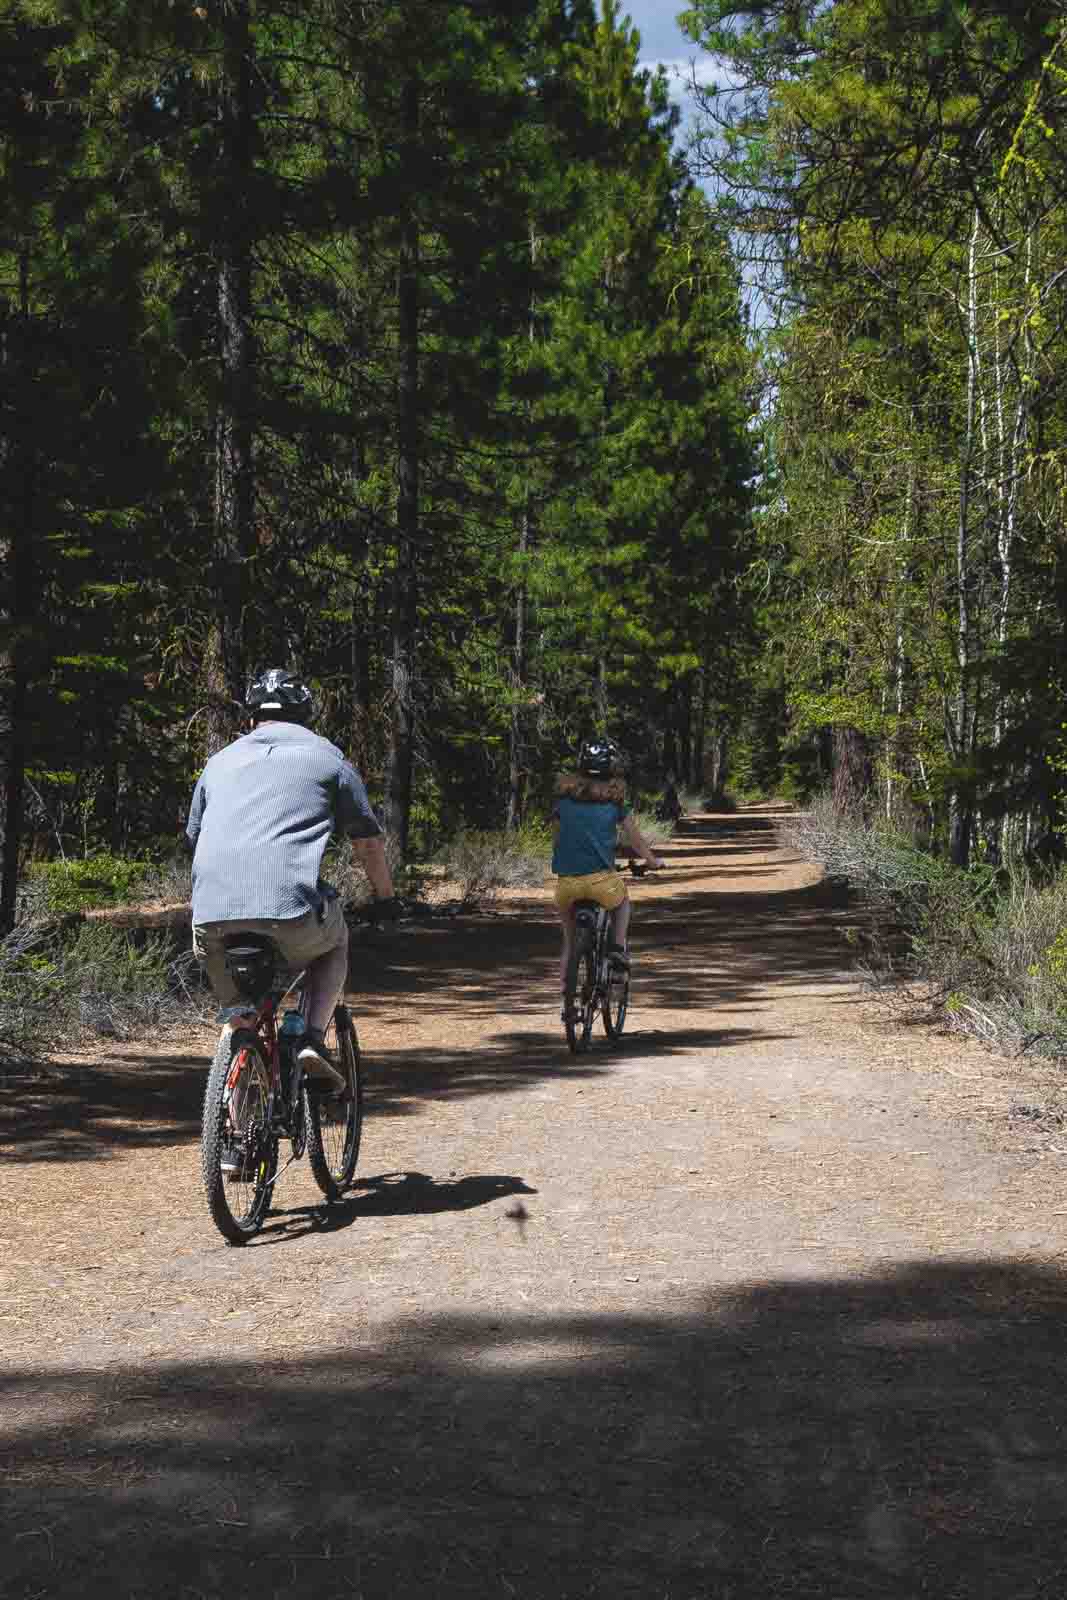 There are some fun biking trails around Silver Falls State Park.